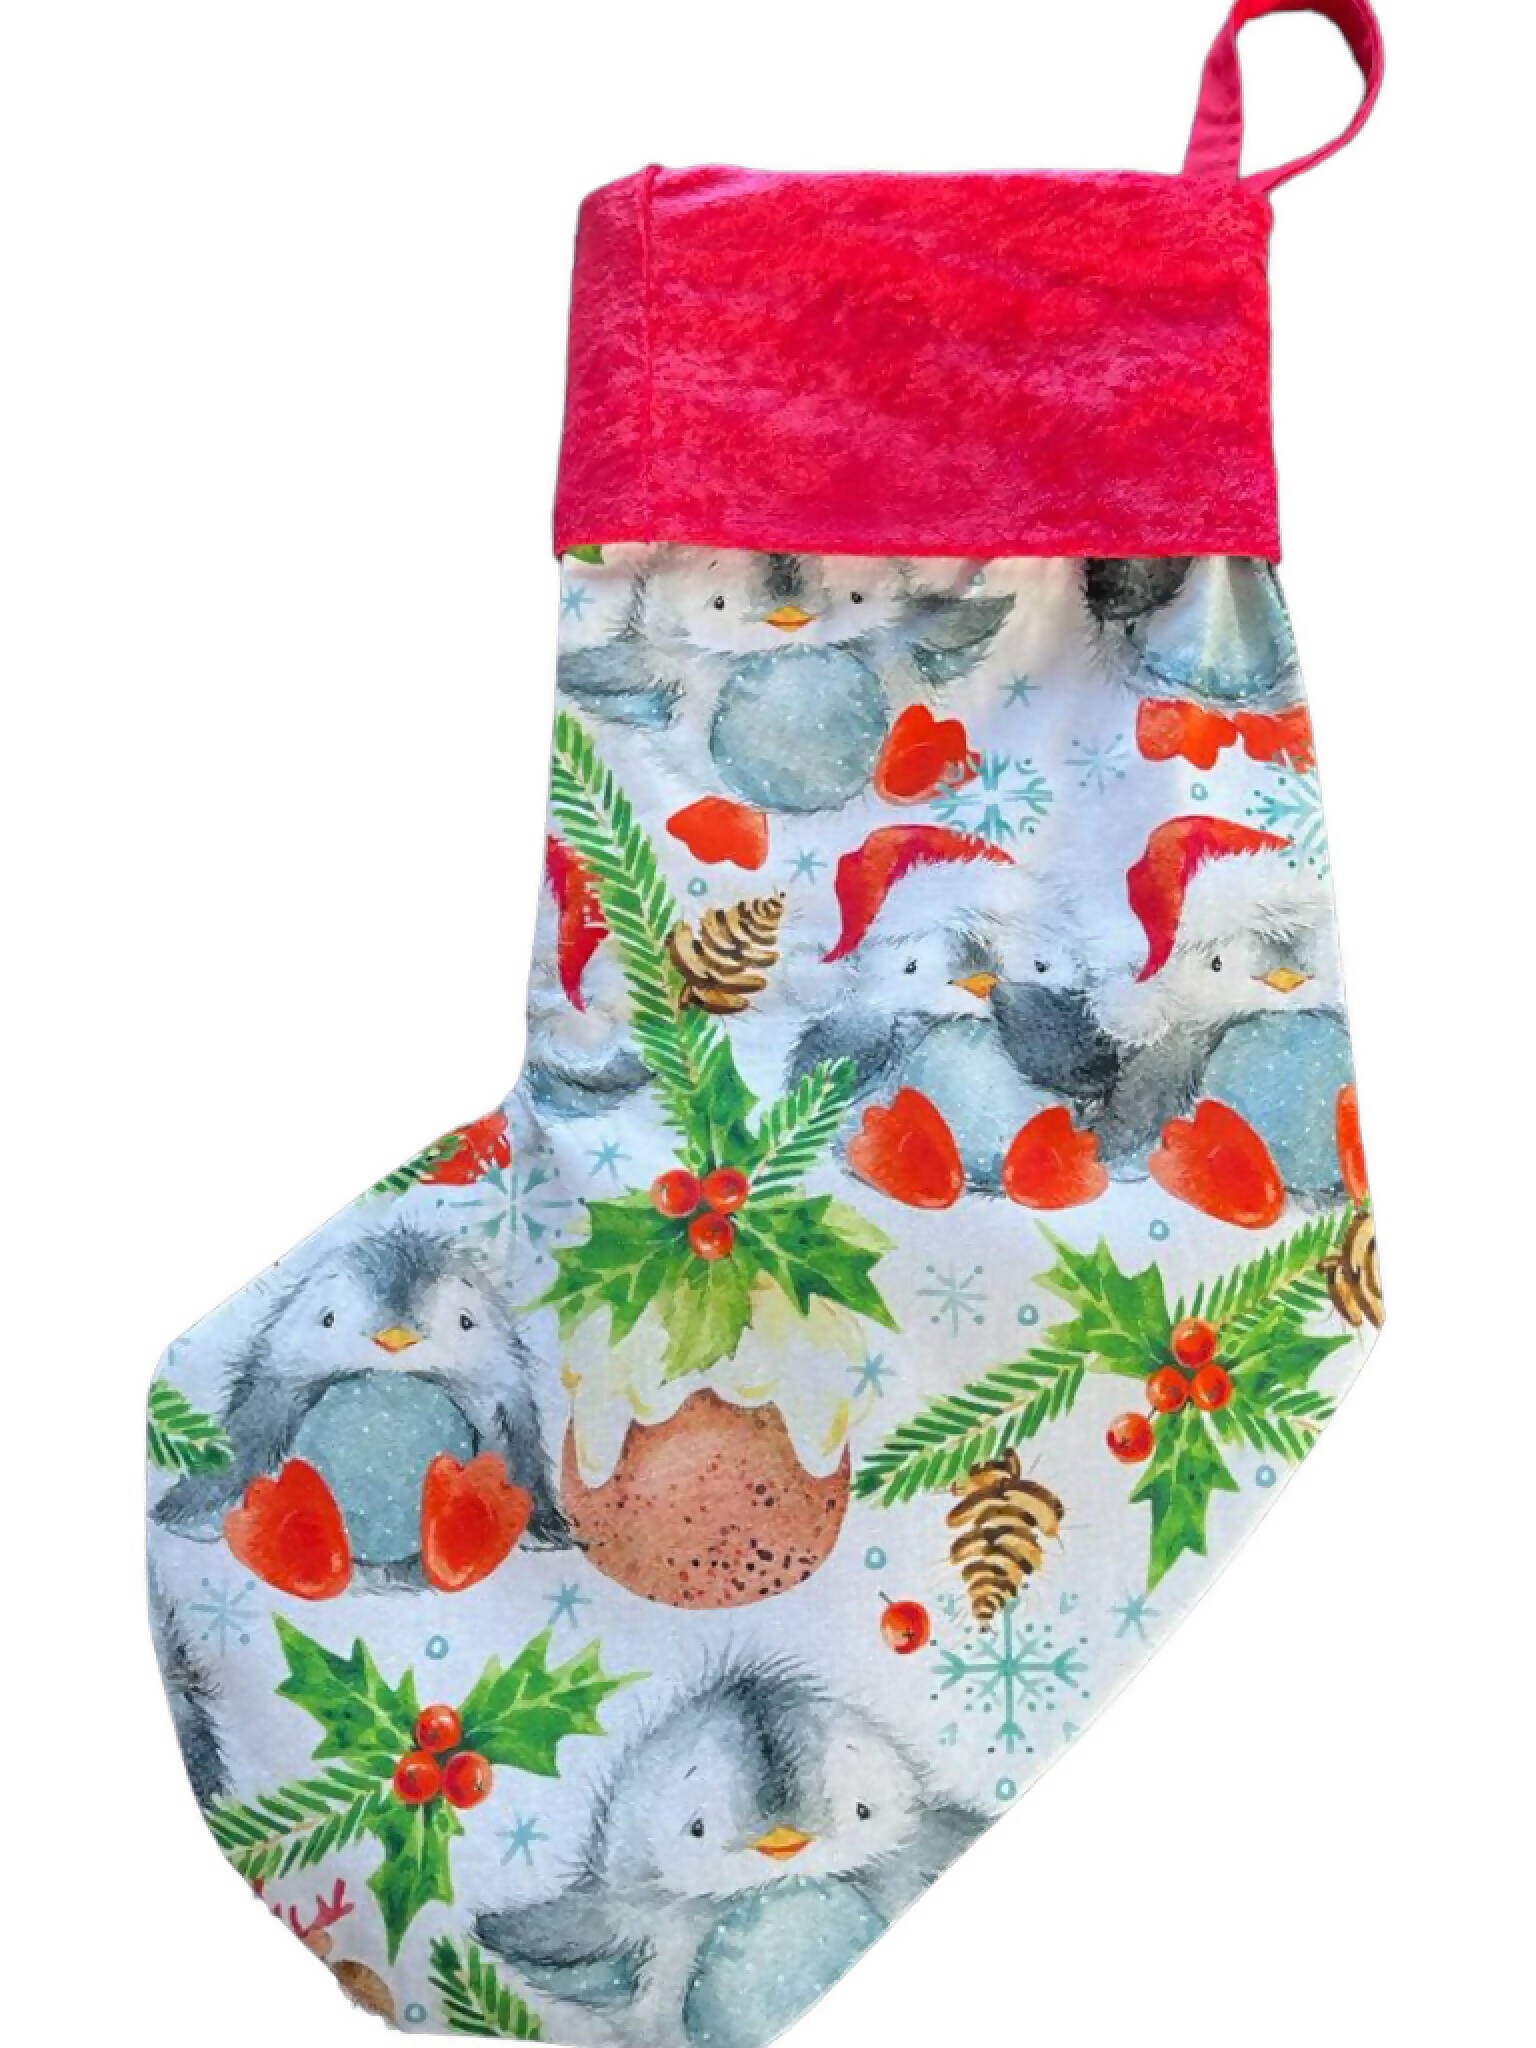 Fabulous Christmas Stockings